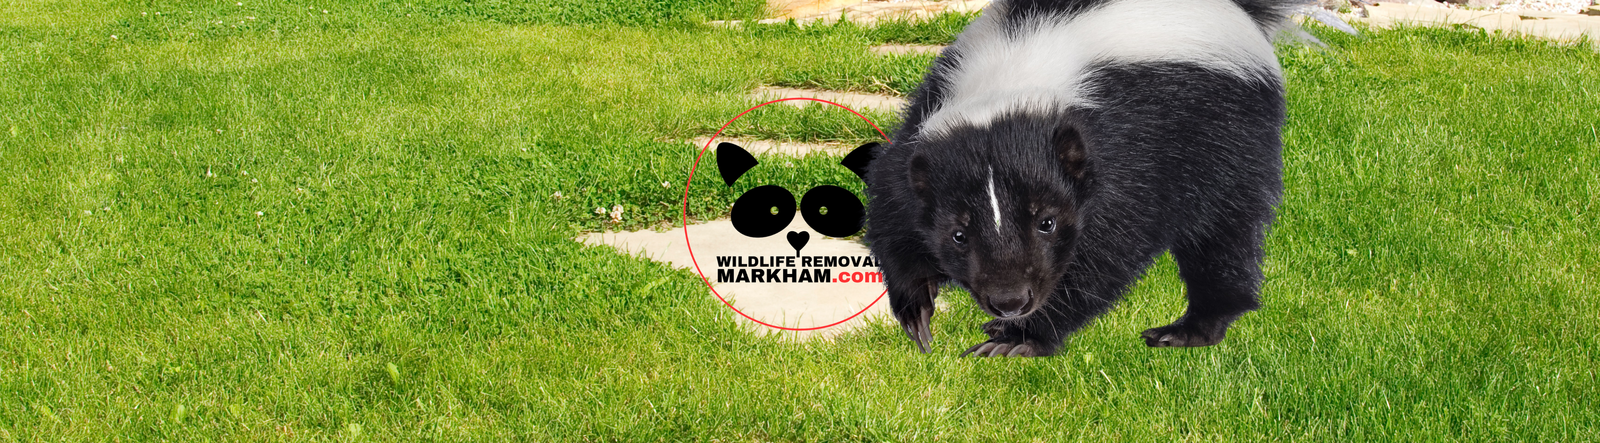 Skunk Removal Markham